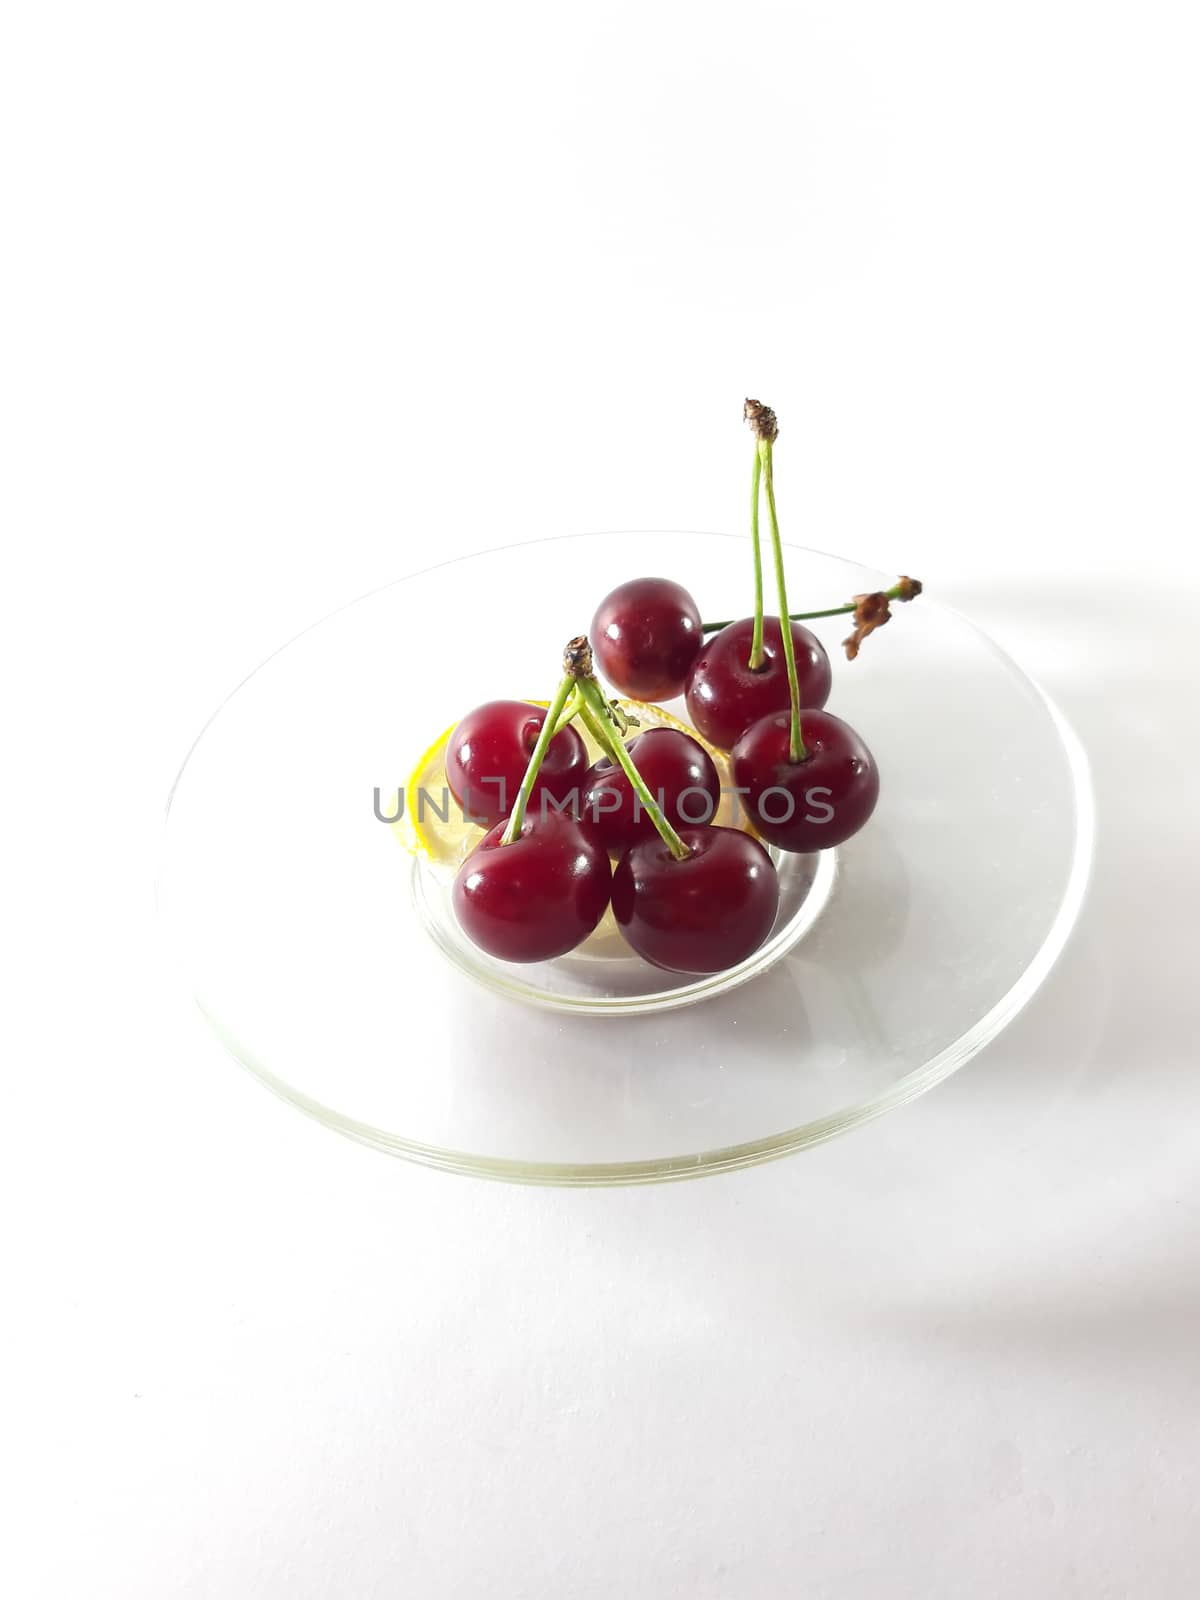 Photo cherry and lemon. Healthy food. Vegetarian red food. Berri by polyachenkovv@gmail.com